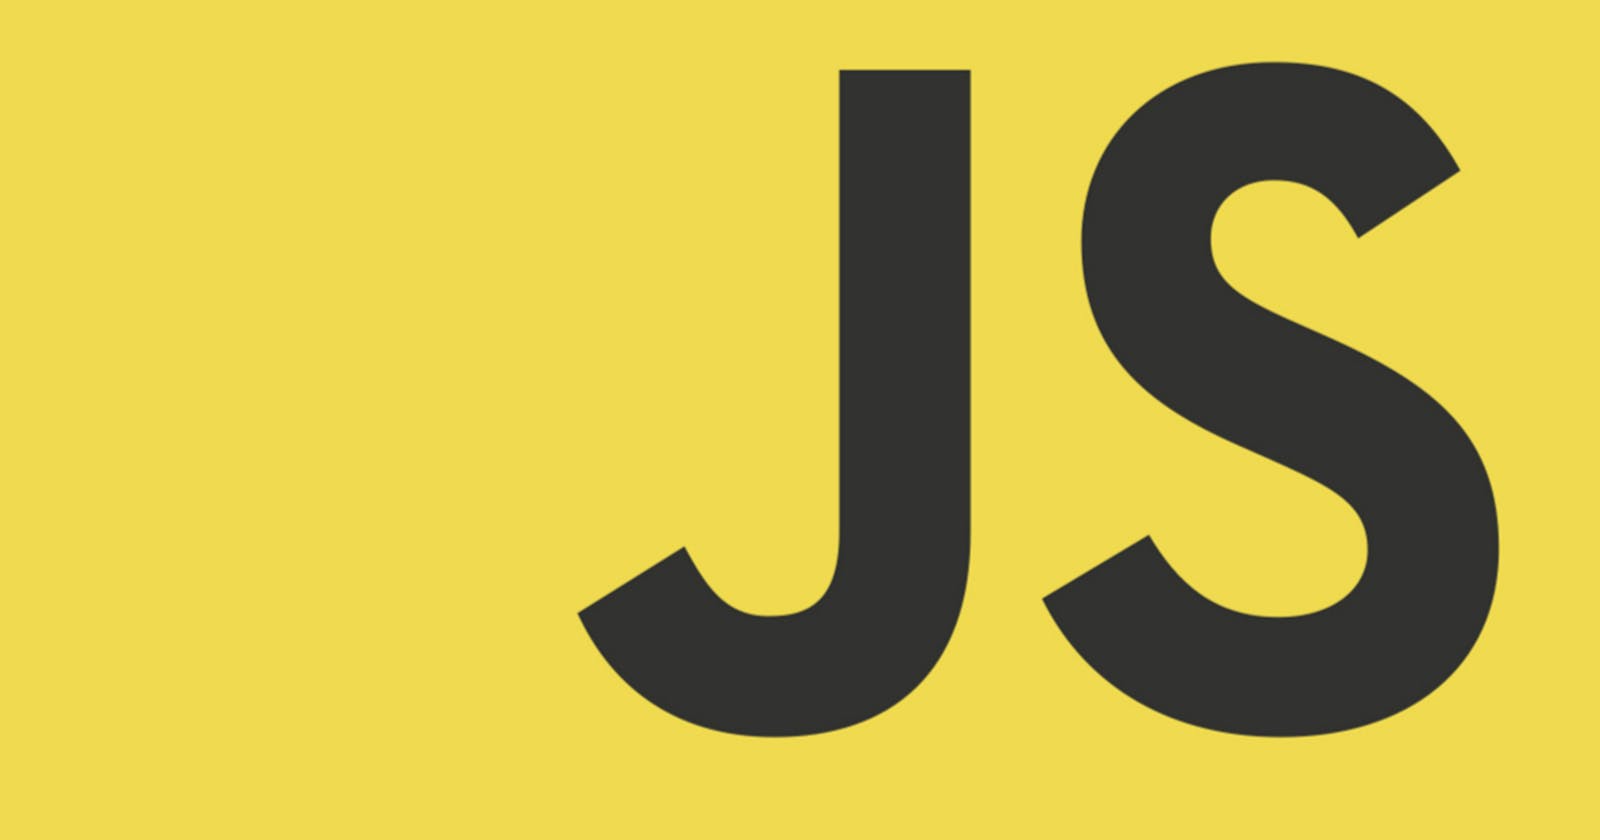 JS - The Event Loop